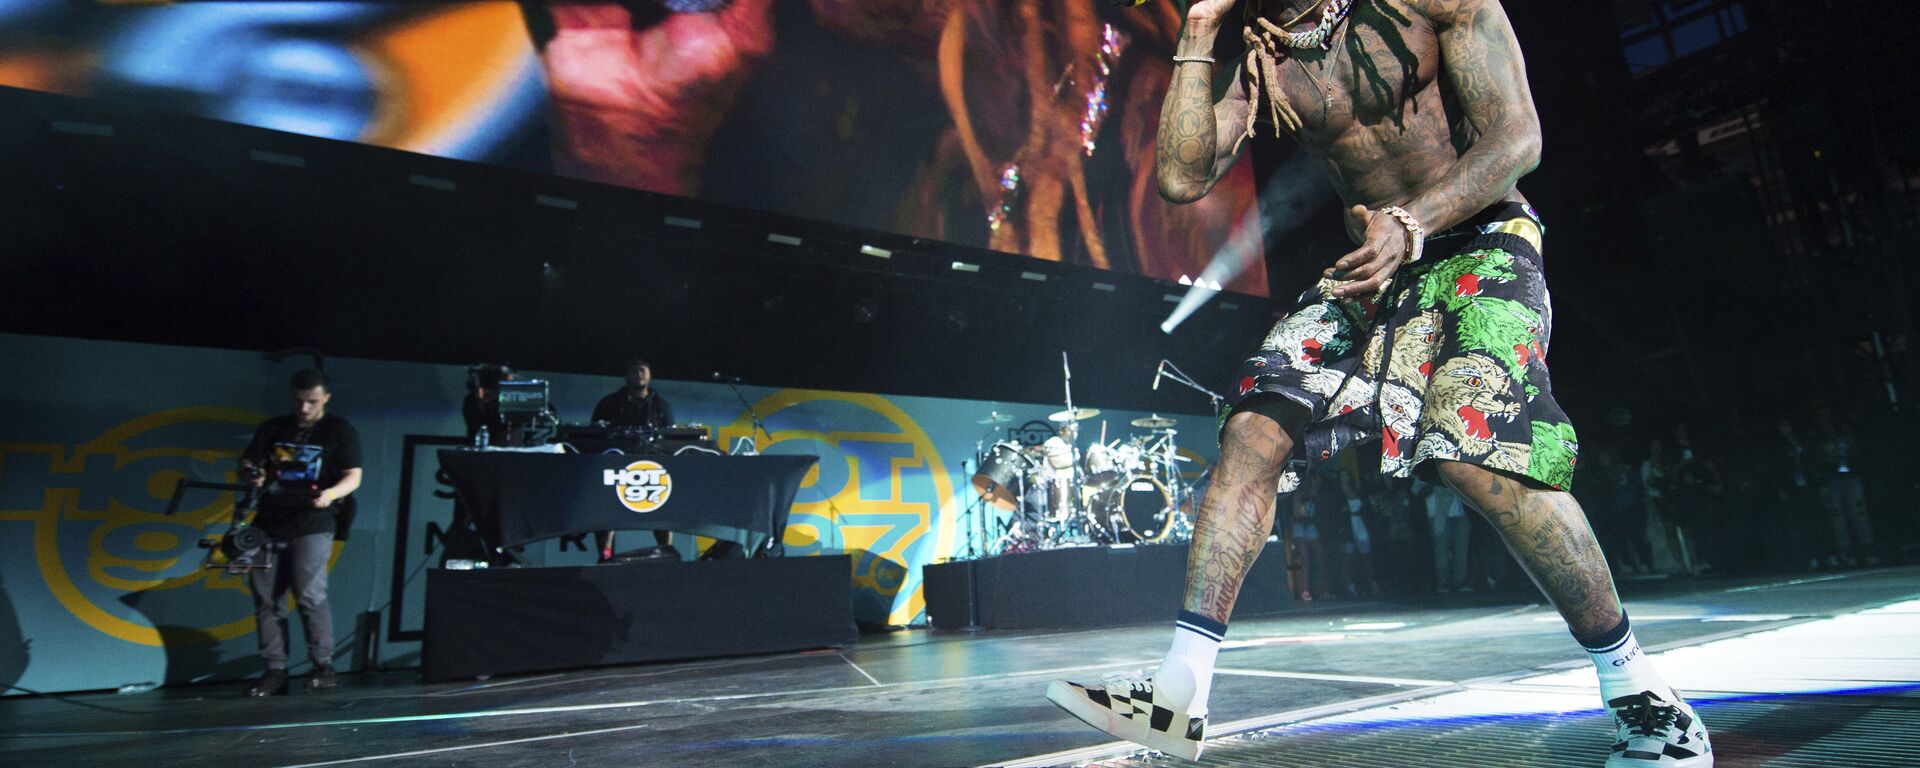 Rapper Lil Wayne performs at HOT 97 Summer Jam 2018 at MetLife Stadium on Sunday, June 10, 2018, in East Rutherford, New Jersey - Sputnik International, 1920, 20.01.2021